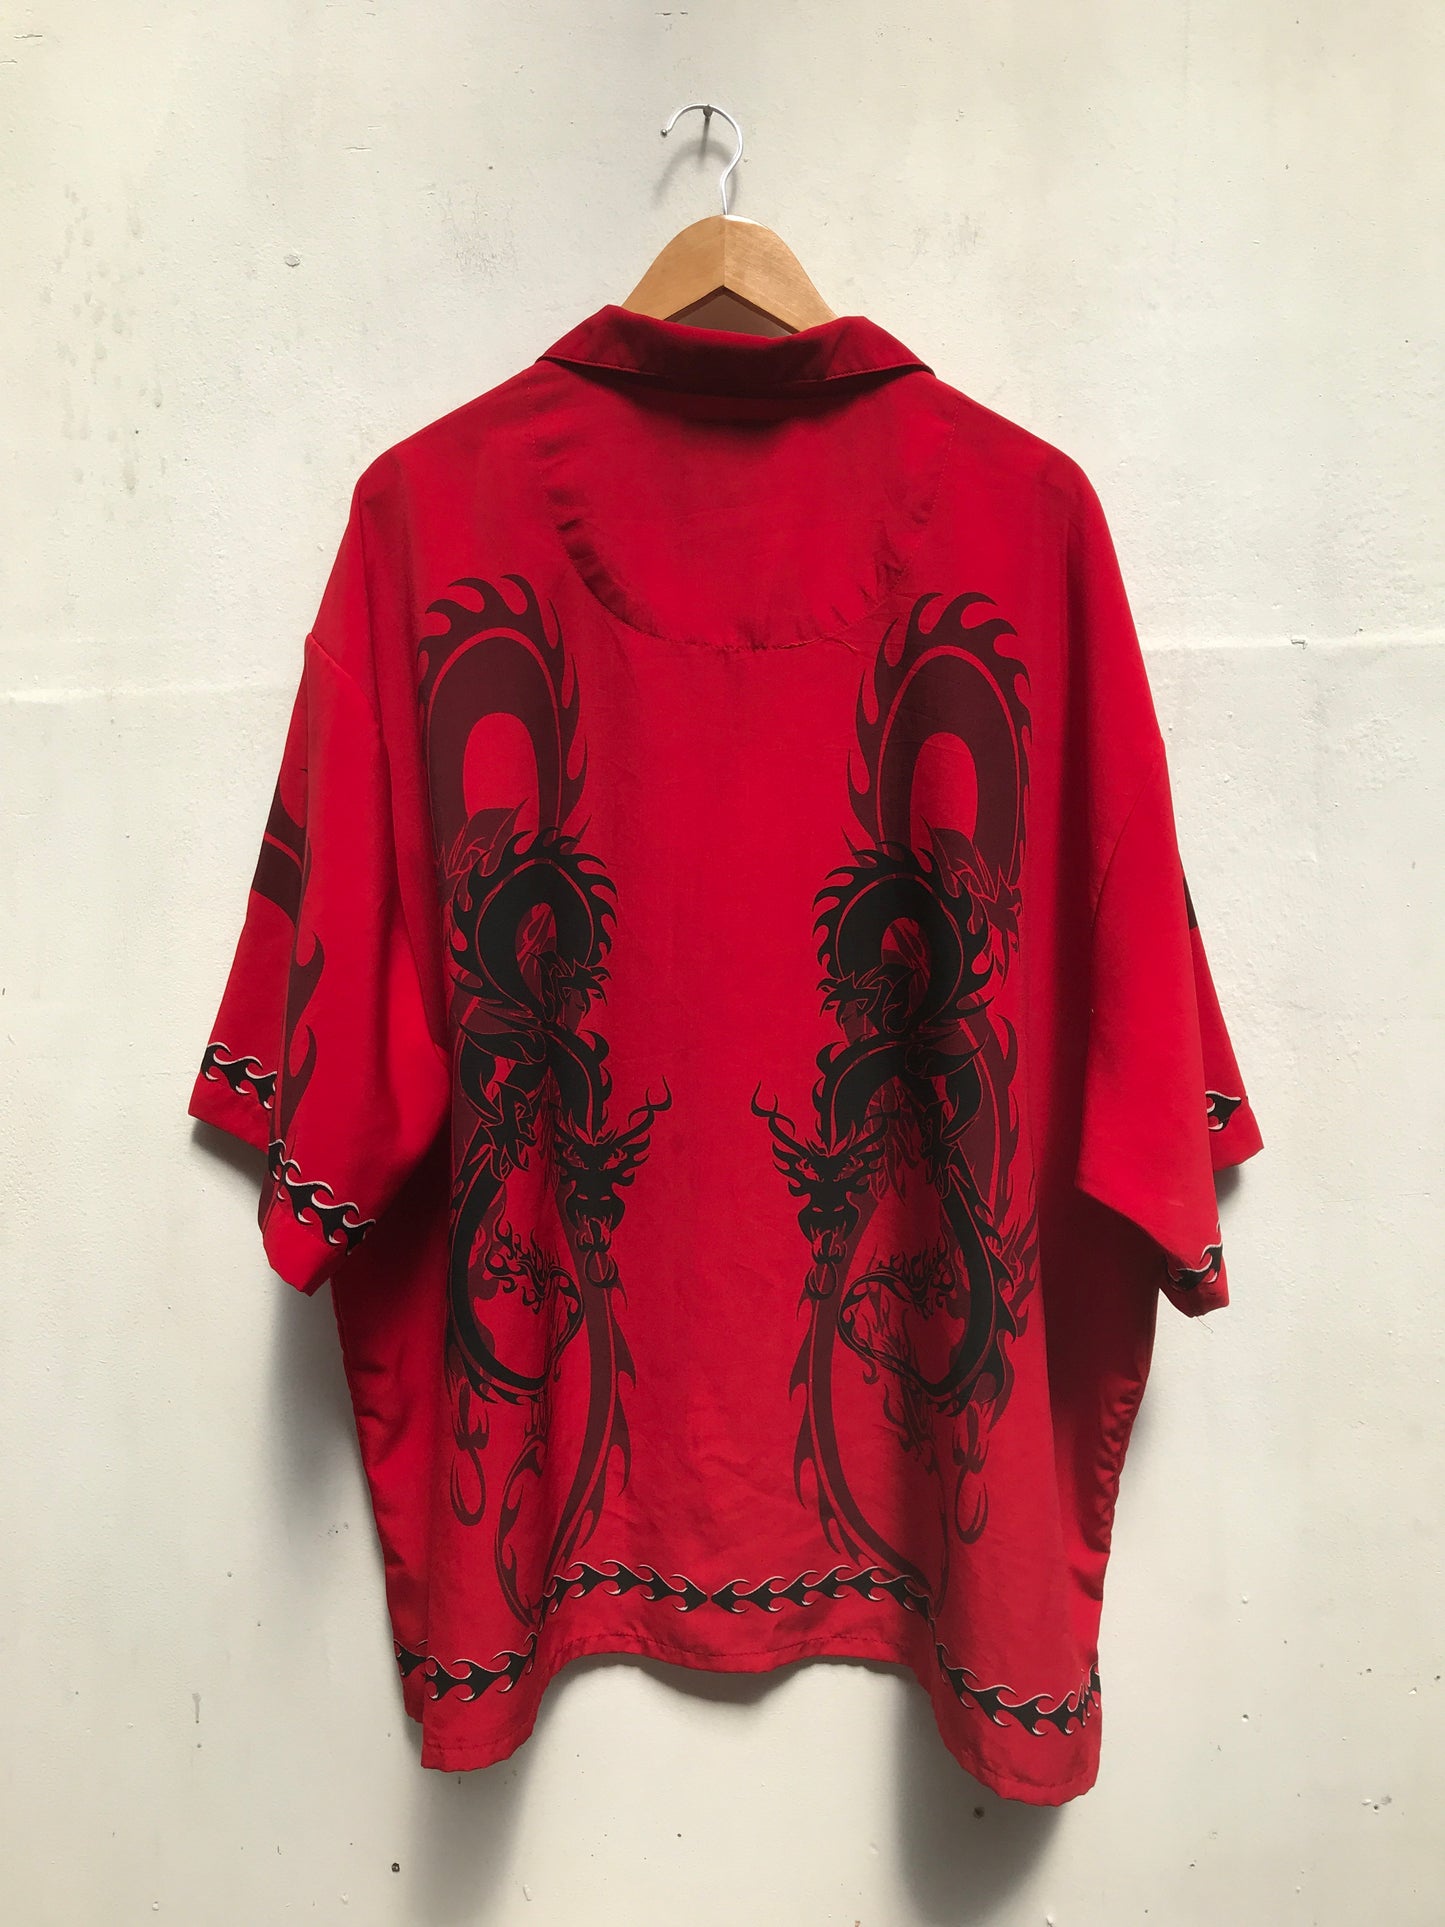 Vintage Dragons Shirt